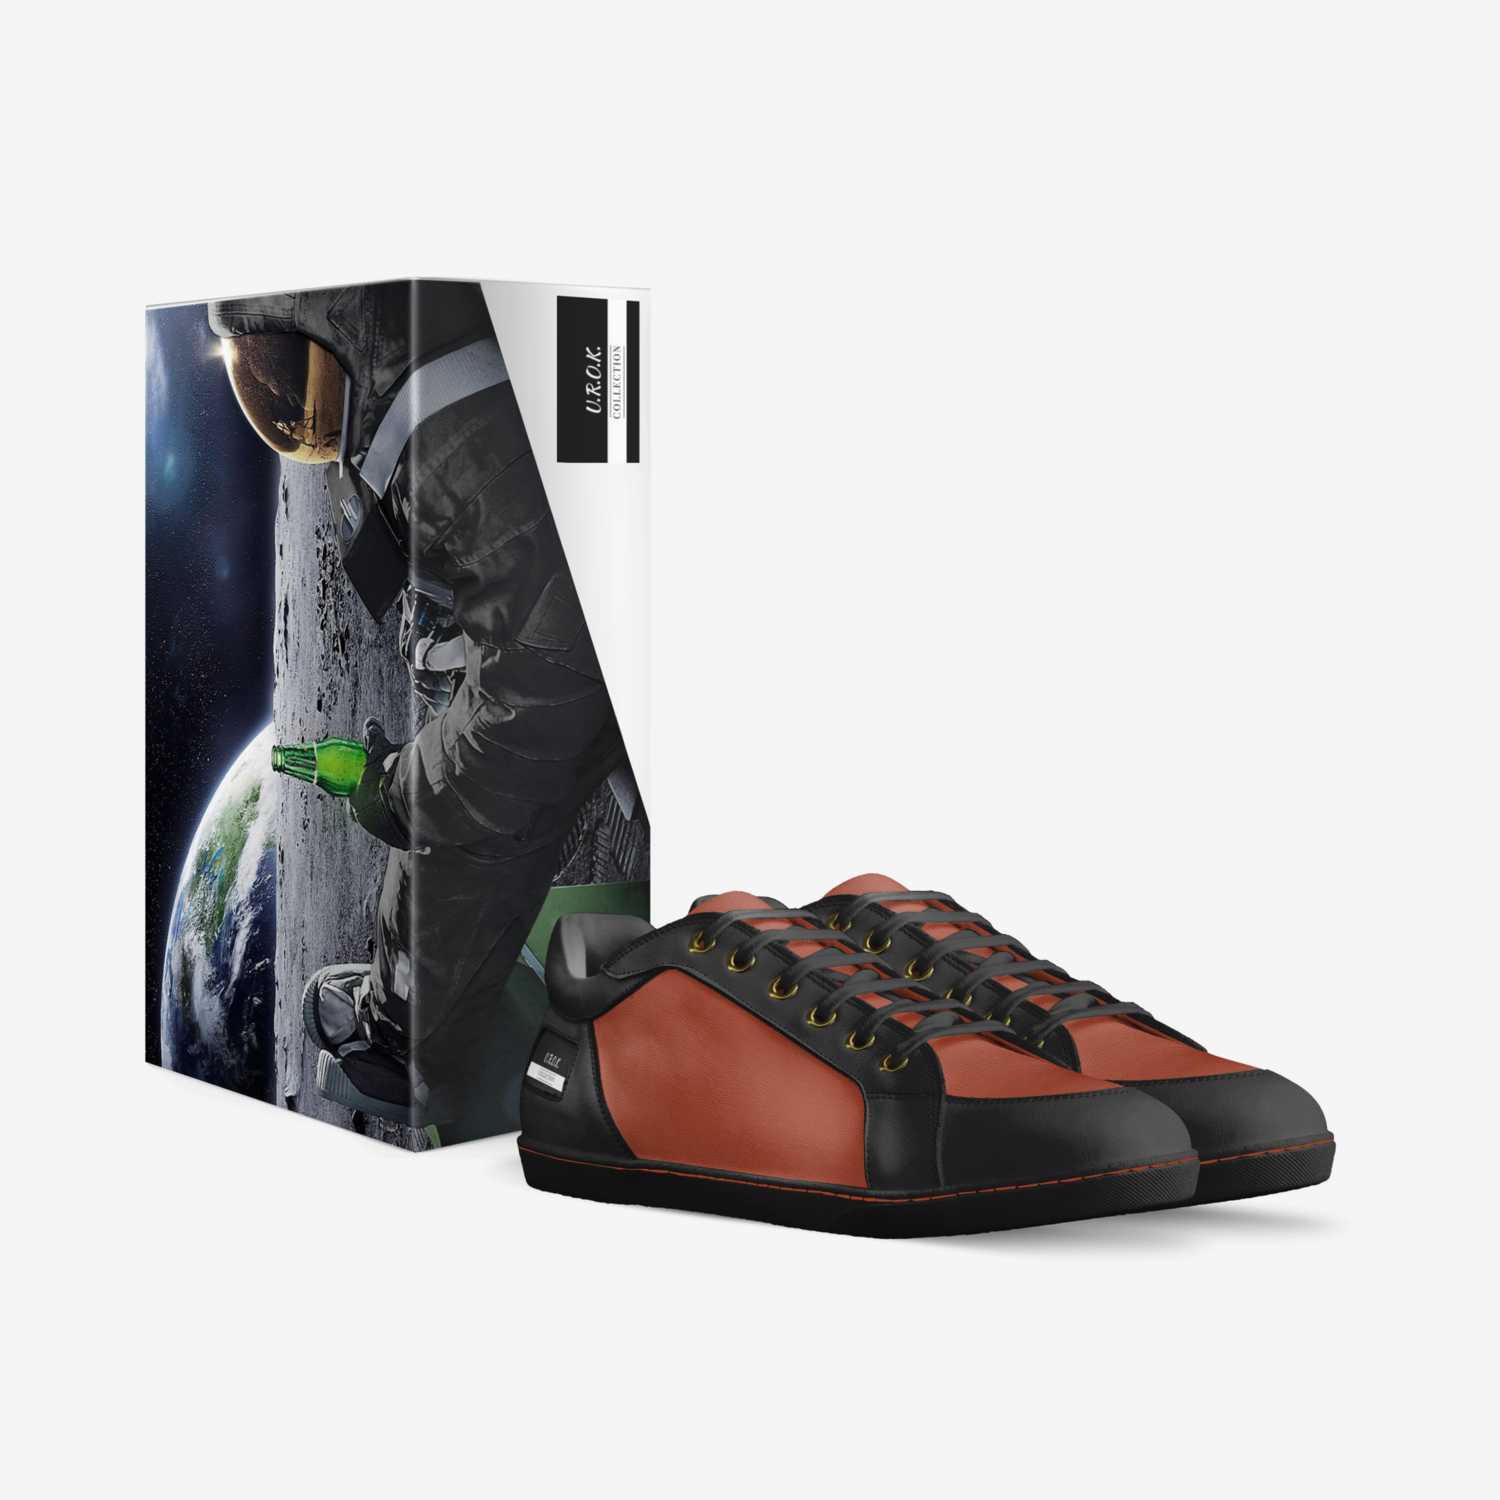 U.R.O.K. custom made in Italy shoes by Joseph Pillar | Box view